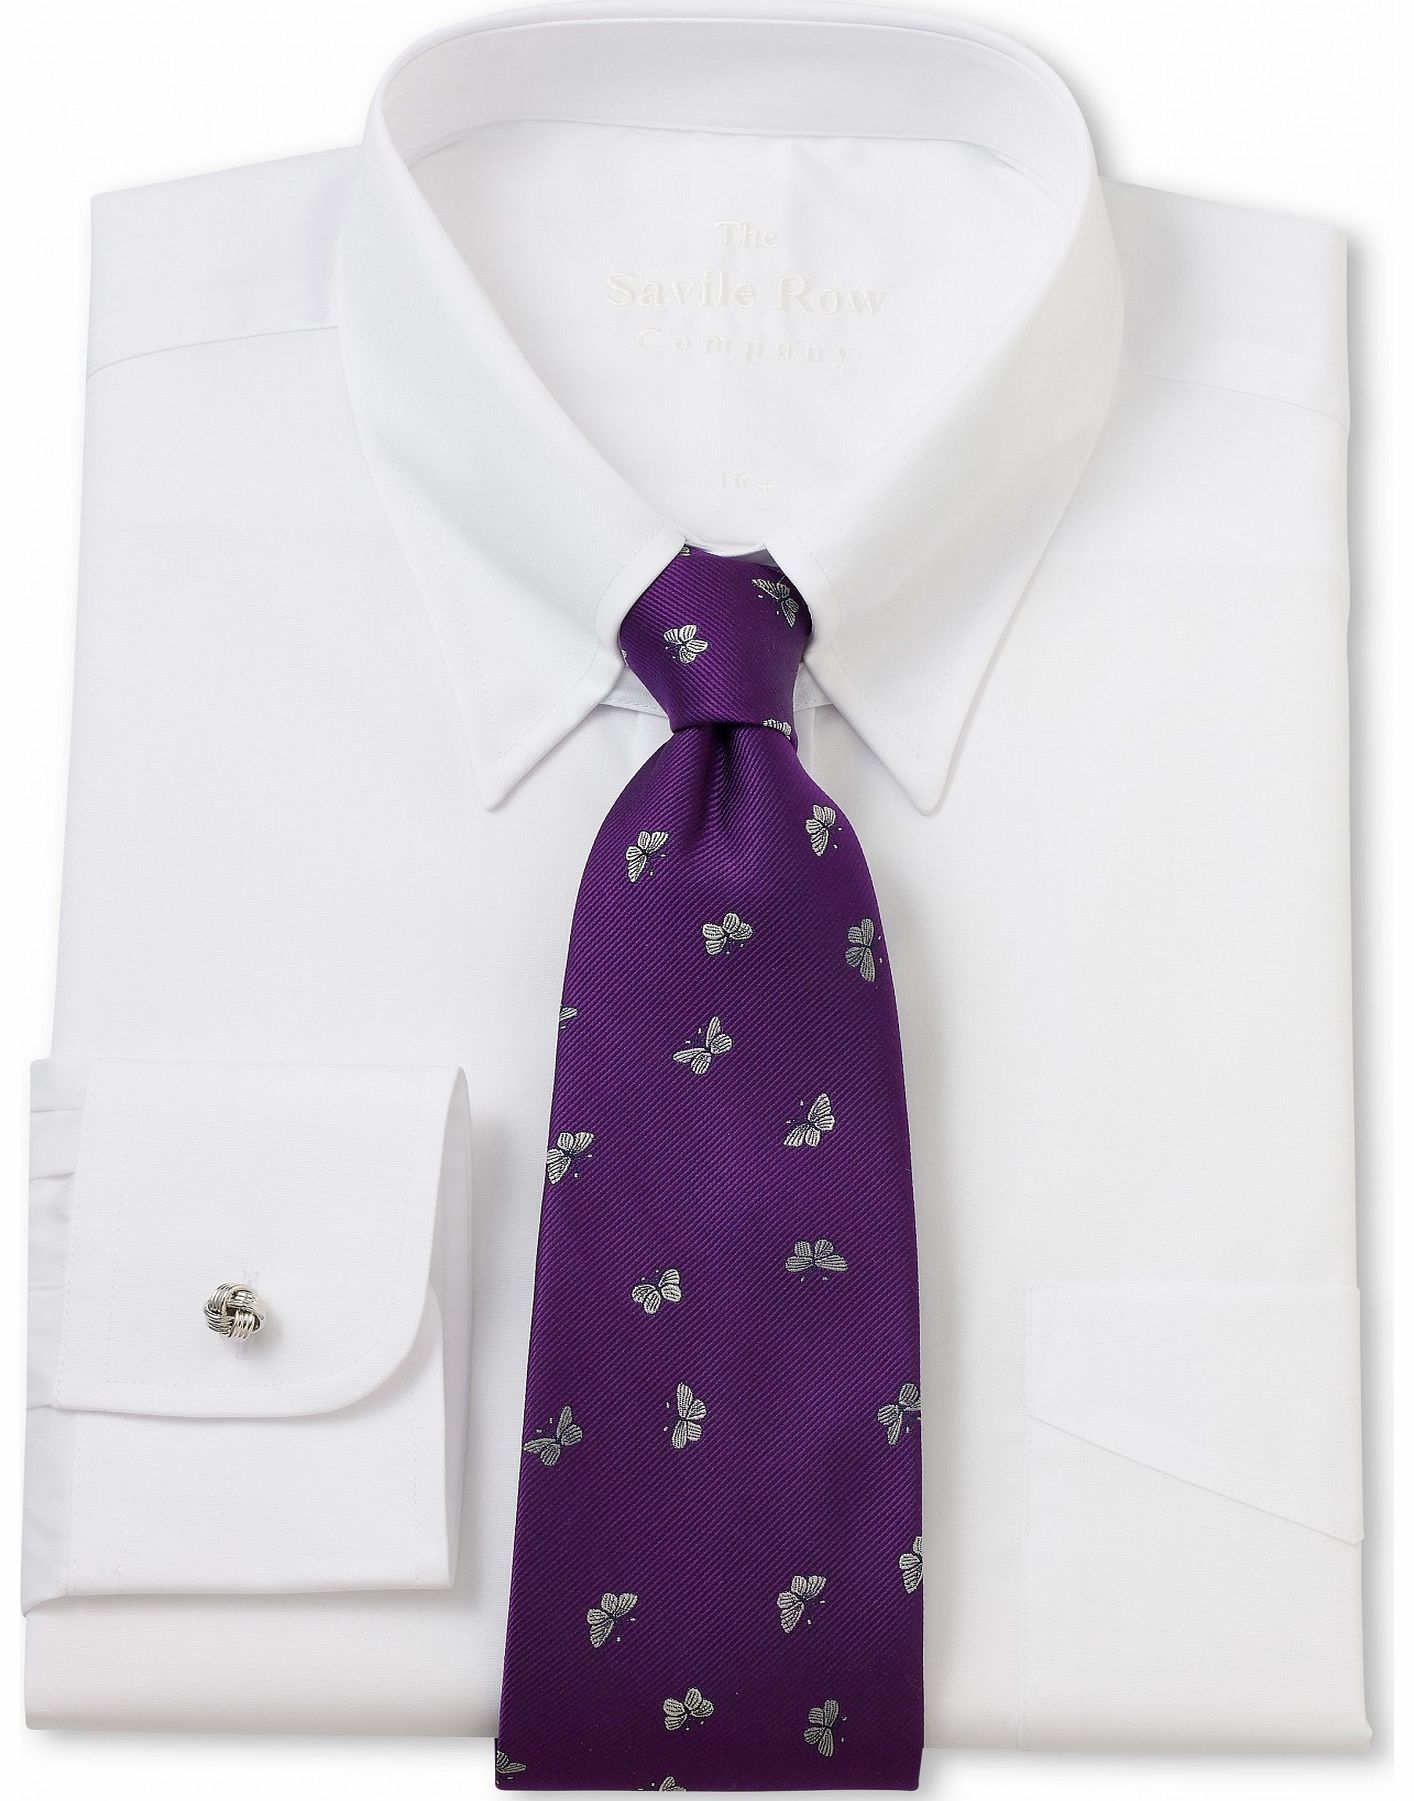 Savile Row Company White Poplin Tab Collar Classic Fit Shirt 15